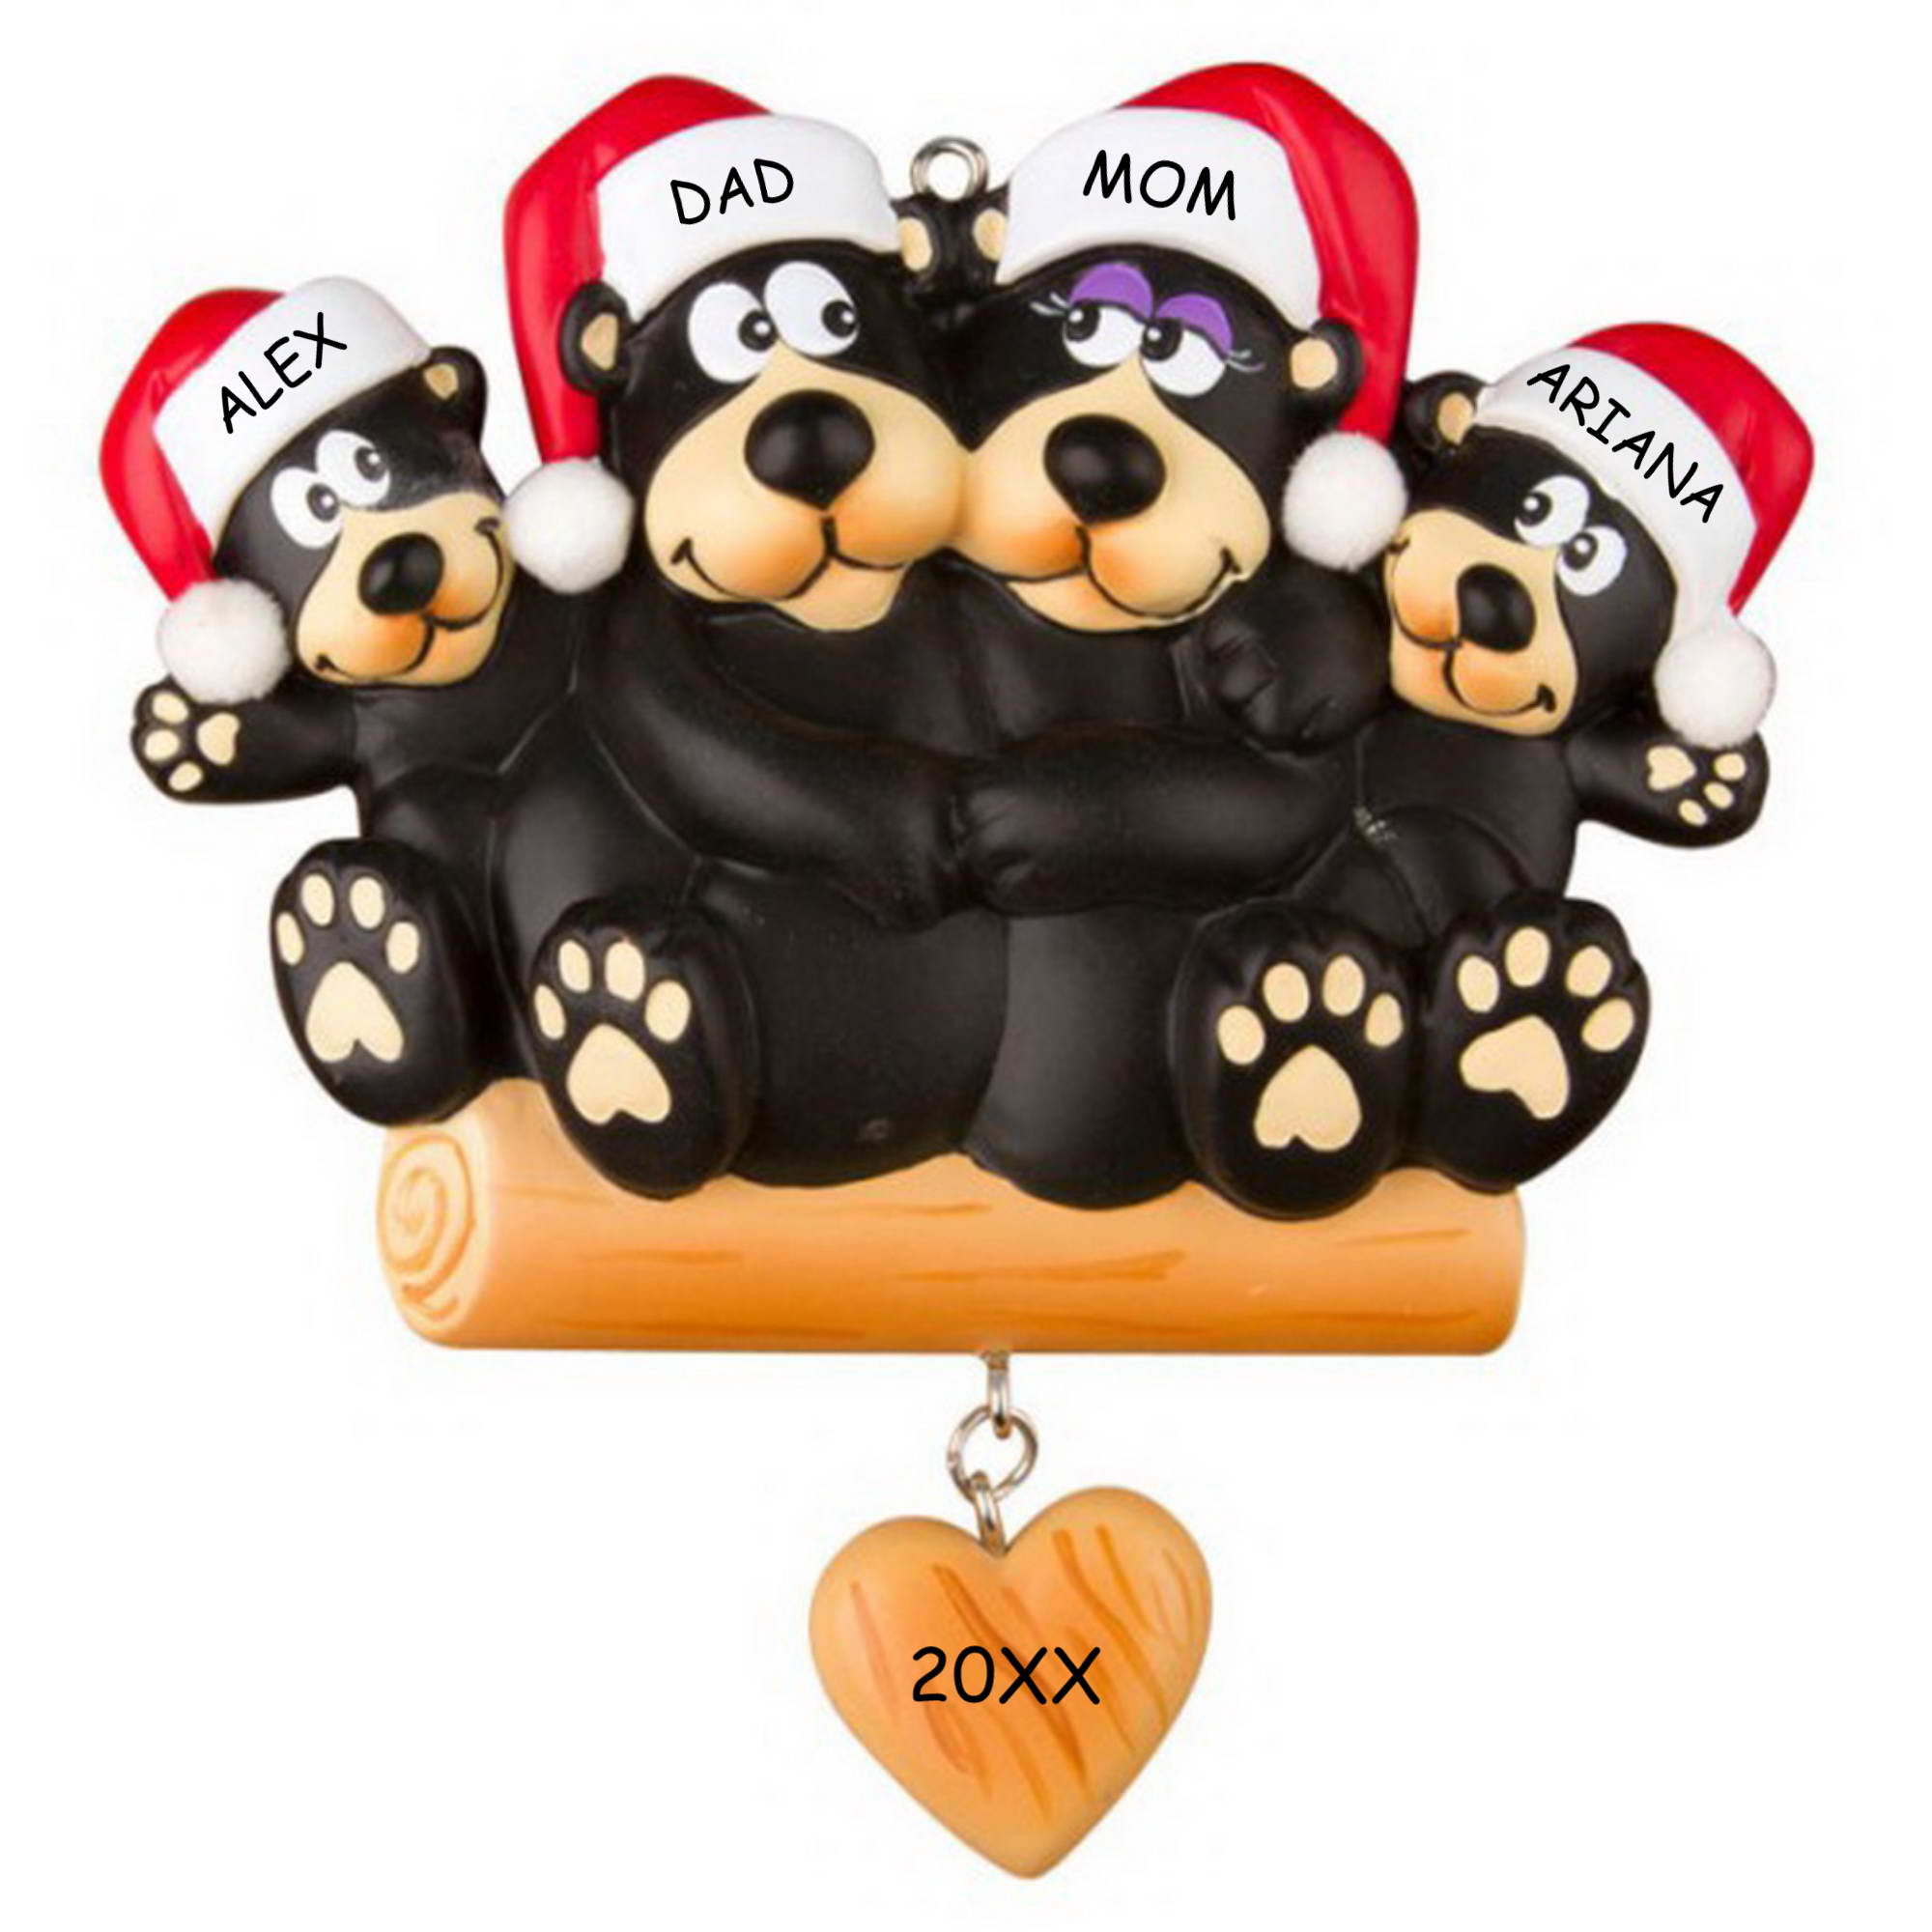 Personalized Huggable Black Bear Family Christmas Ornament - Family of 4